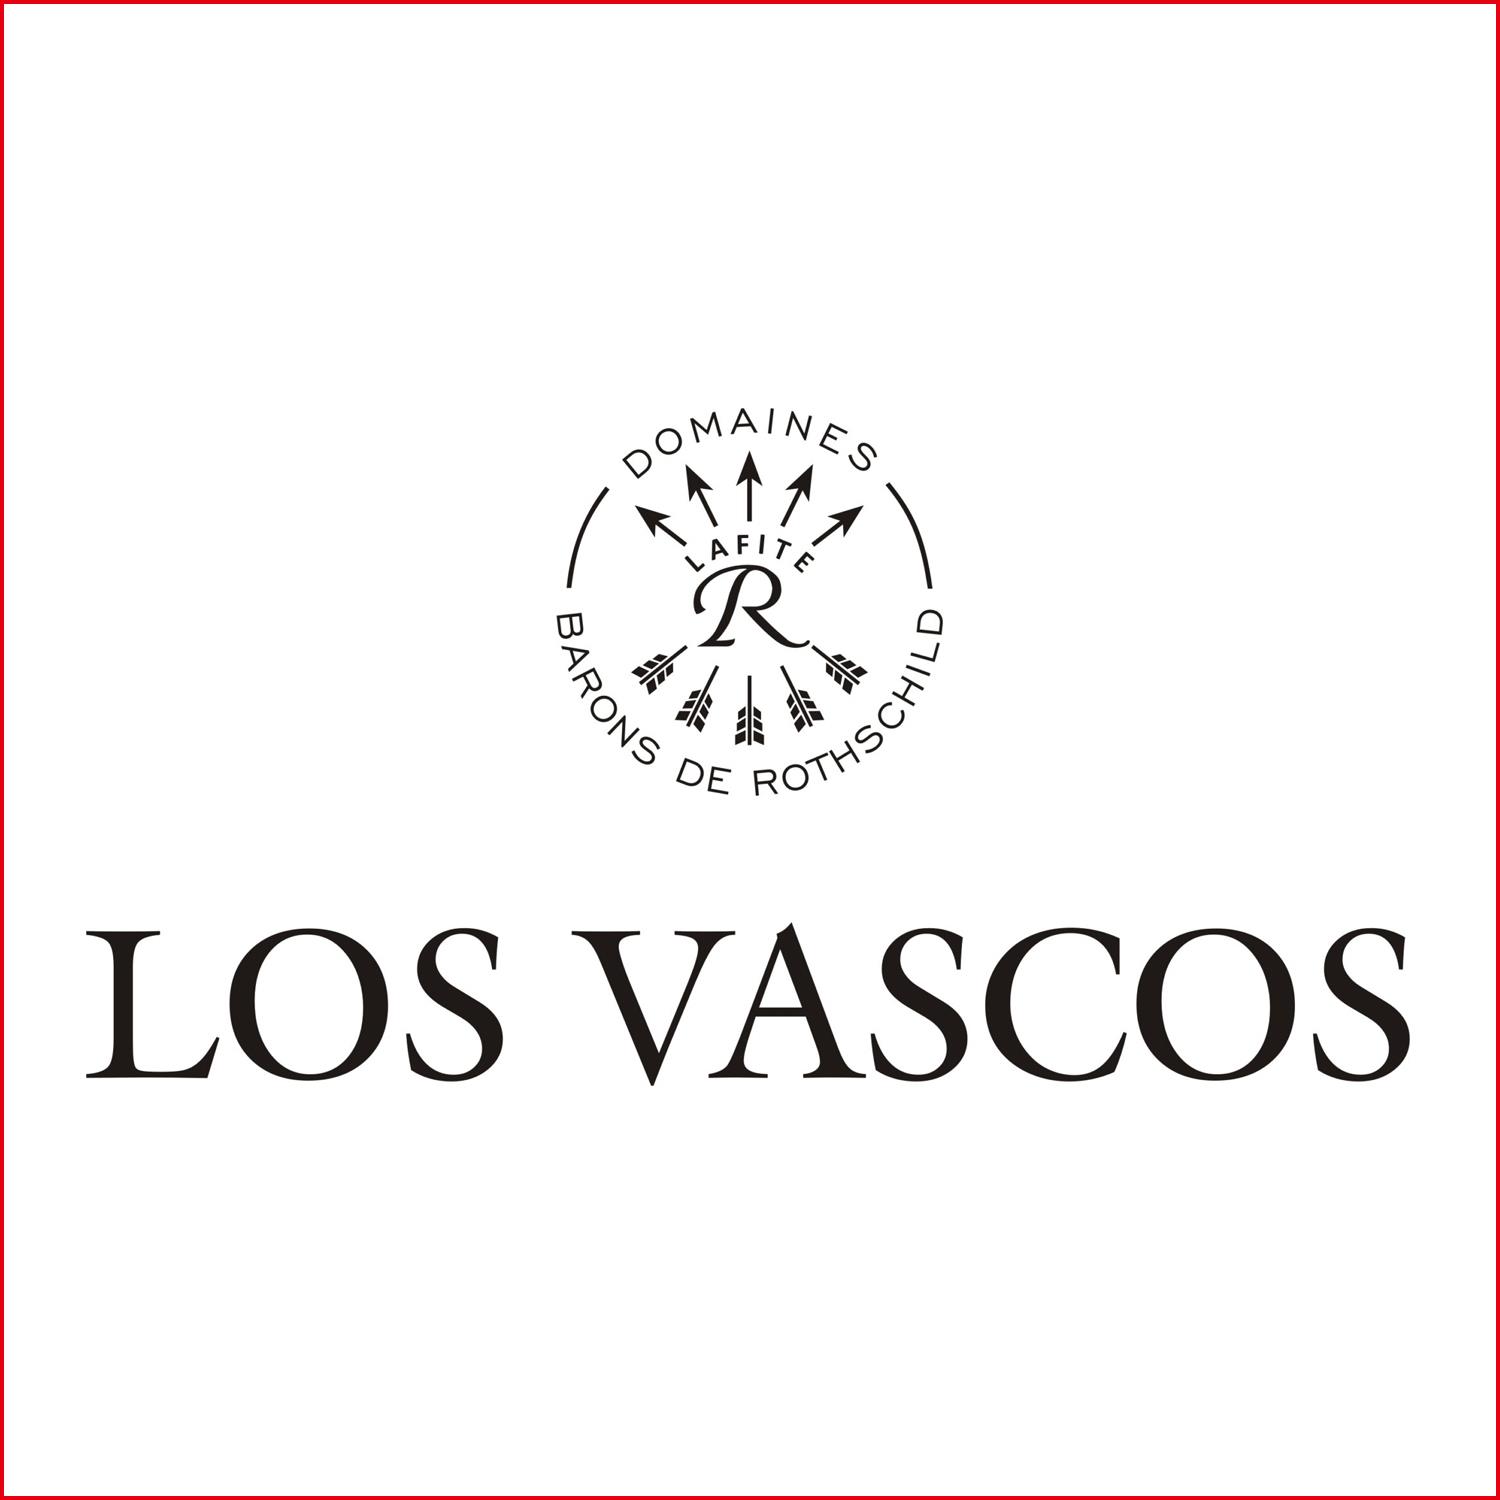 巴斯克酒莊 Los Vascos